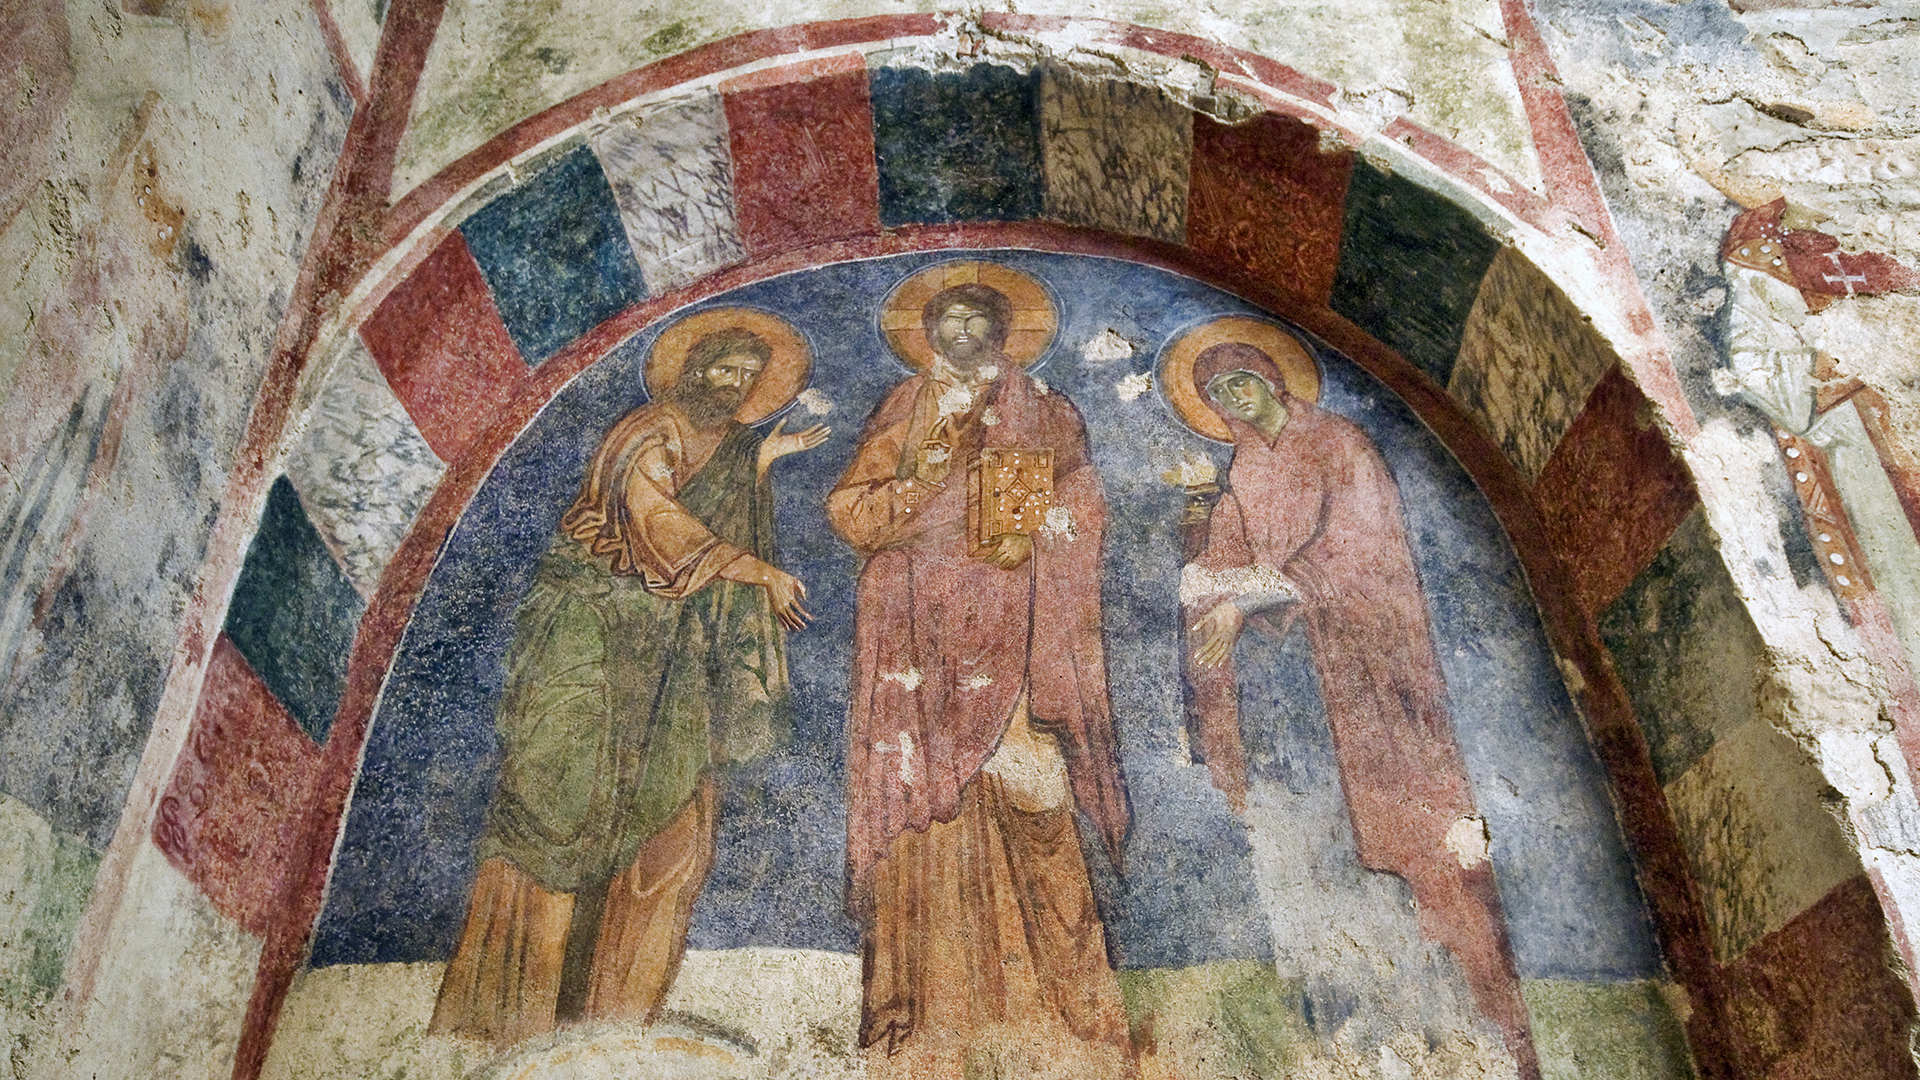 Mural in the Church of St. Nicholas in Demre, Turkey.